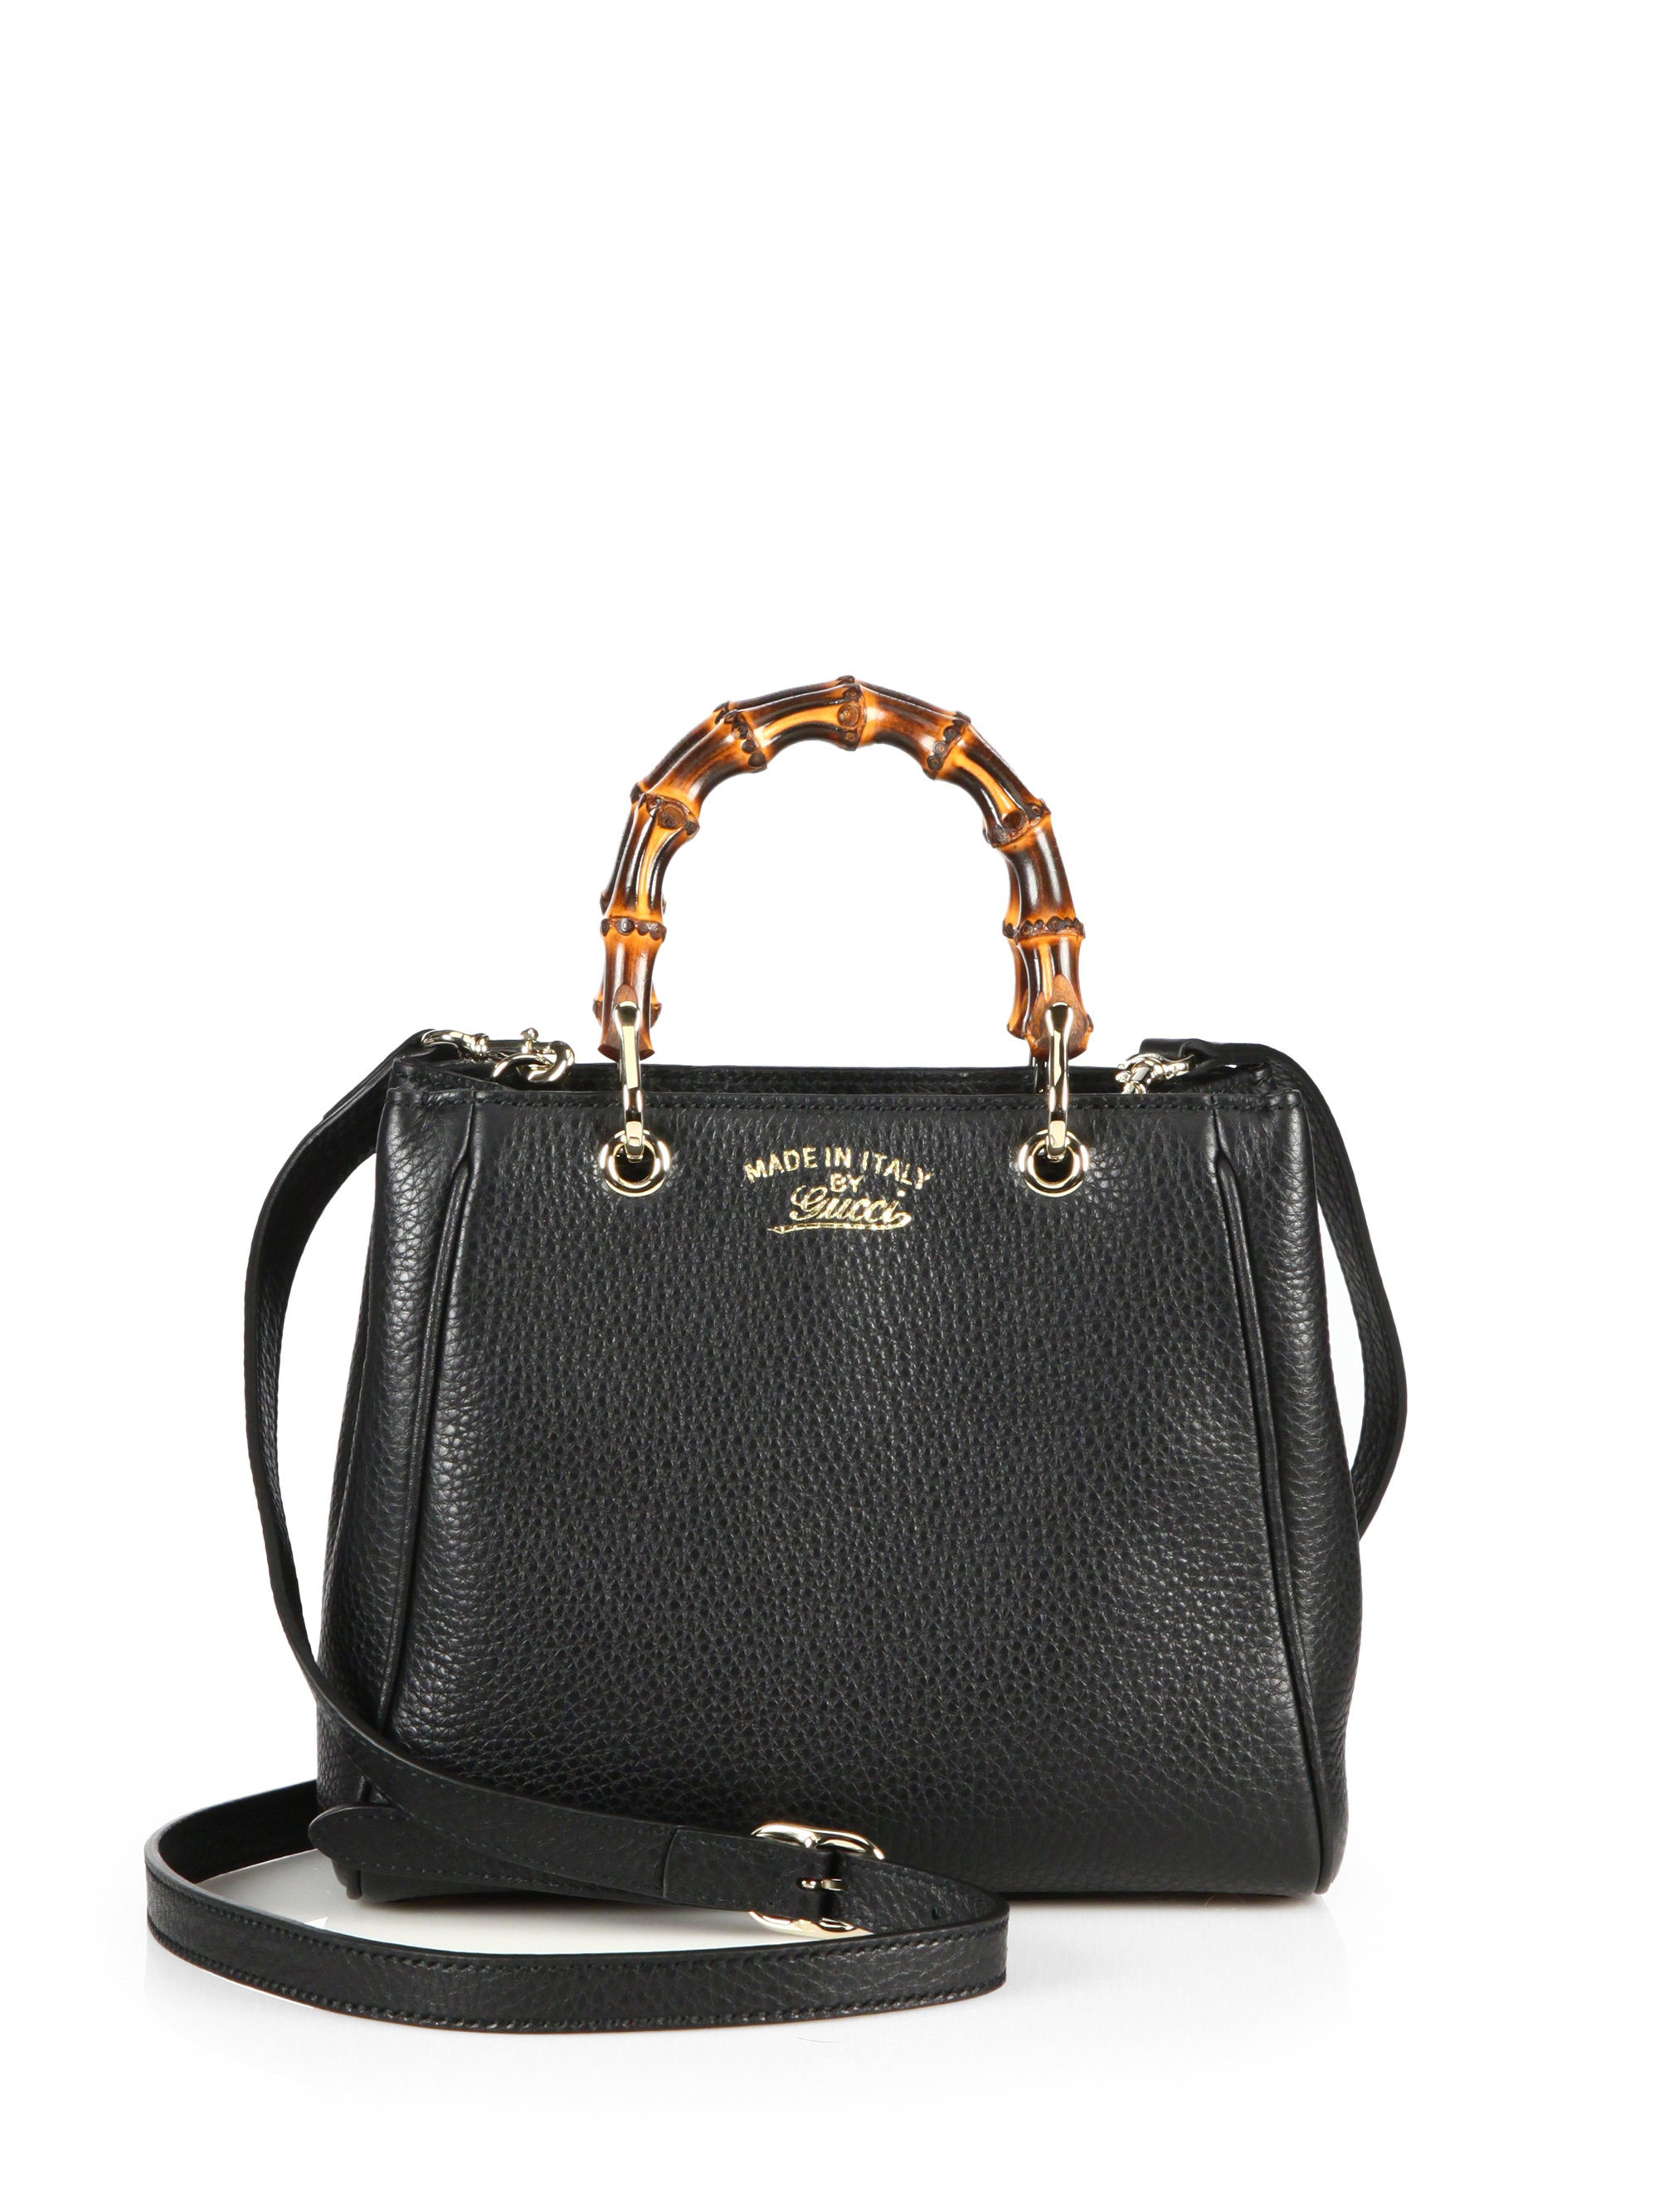 Gucci Bamboo Shopper Mini Leather Top Handle Bag in Black | Lyst